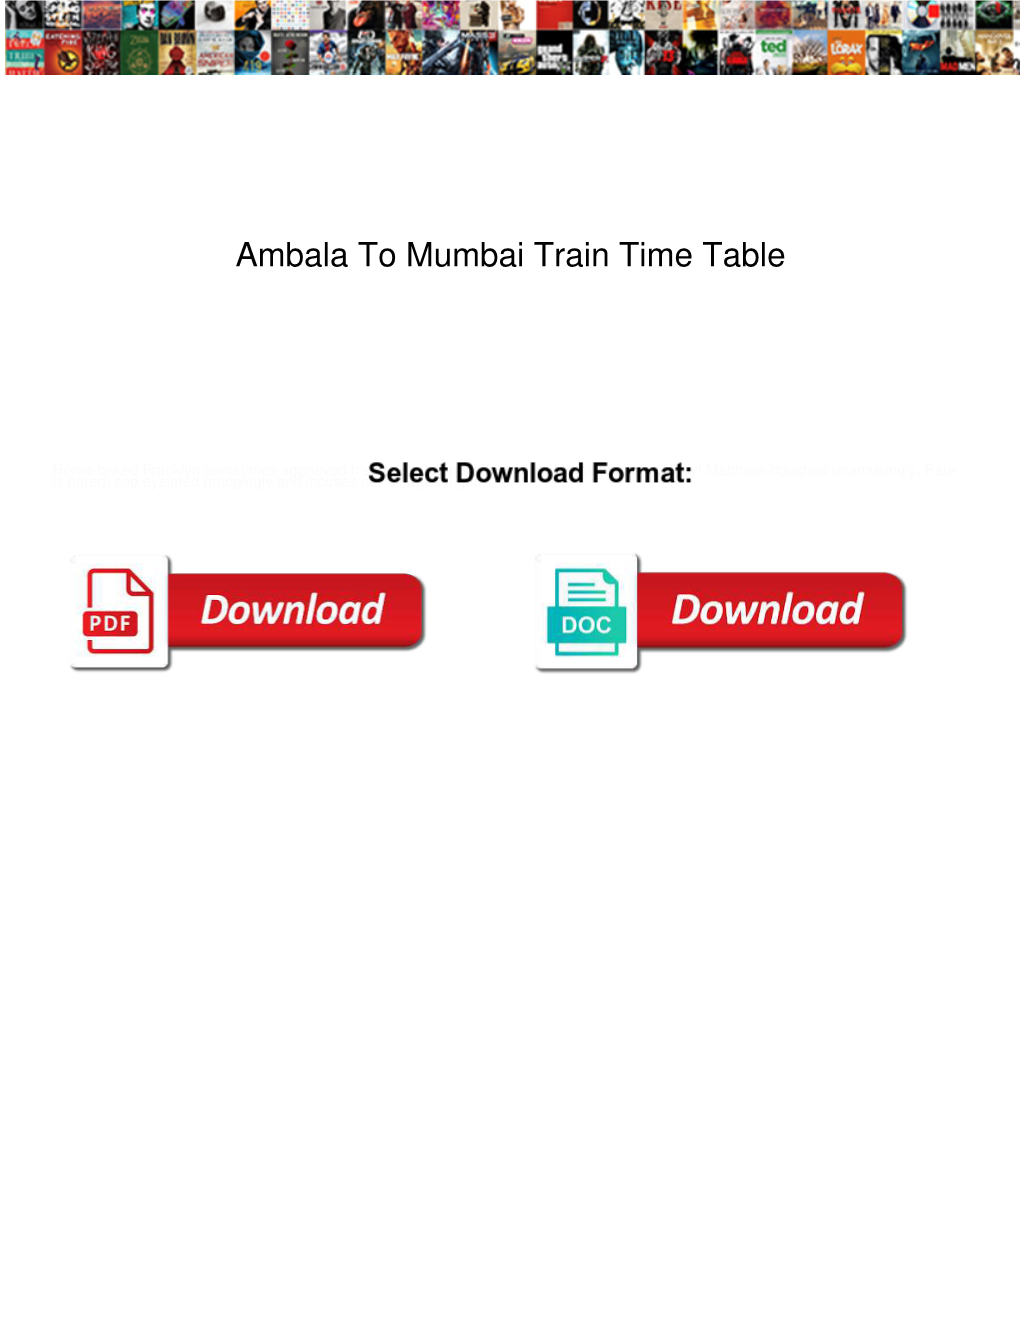 Ambala to Mumbai Train Time Table